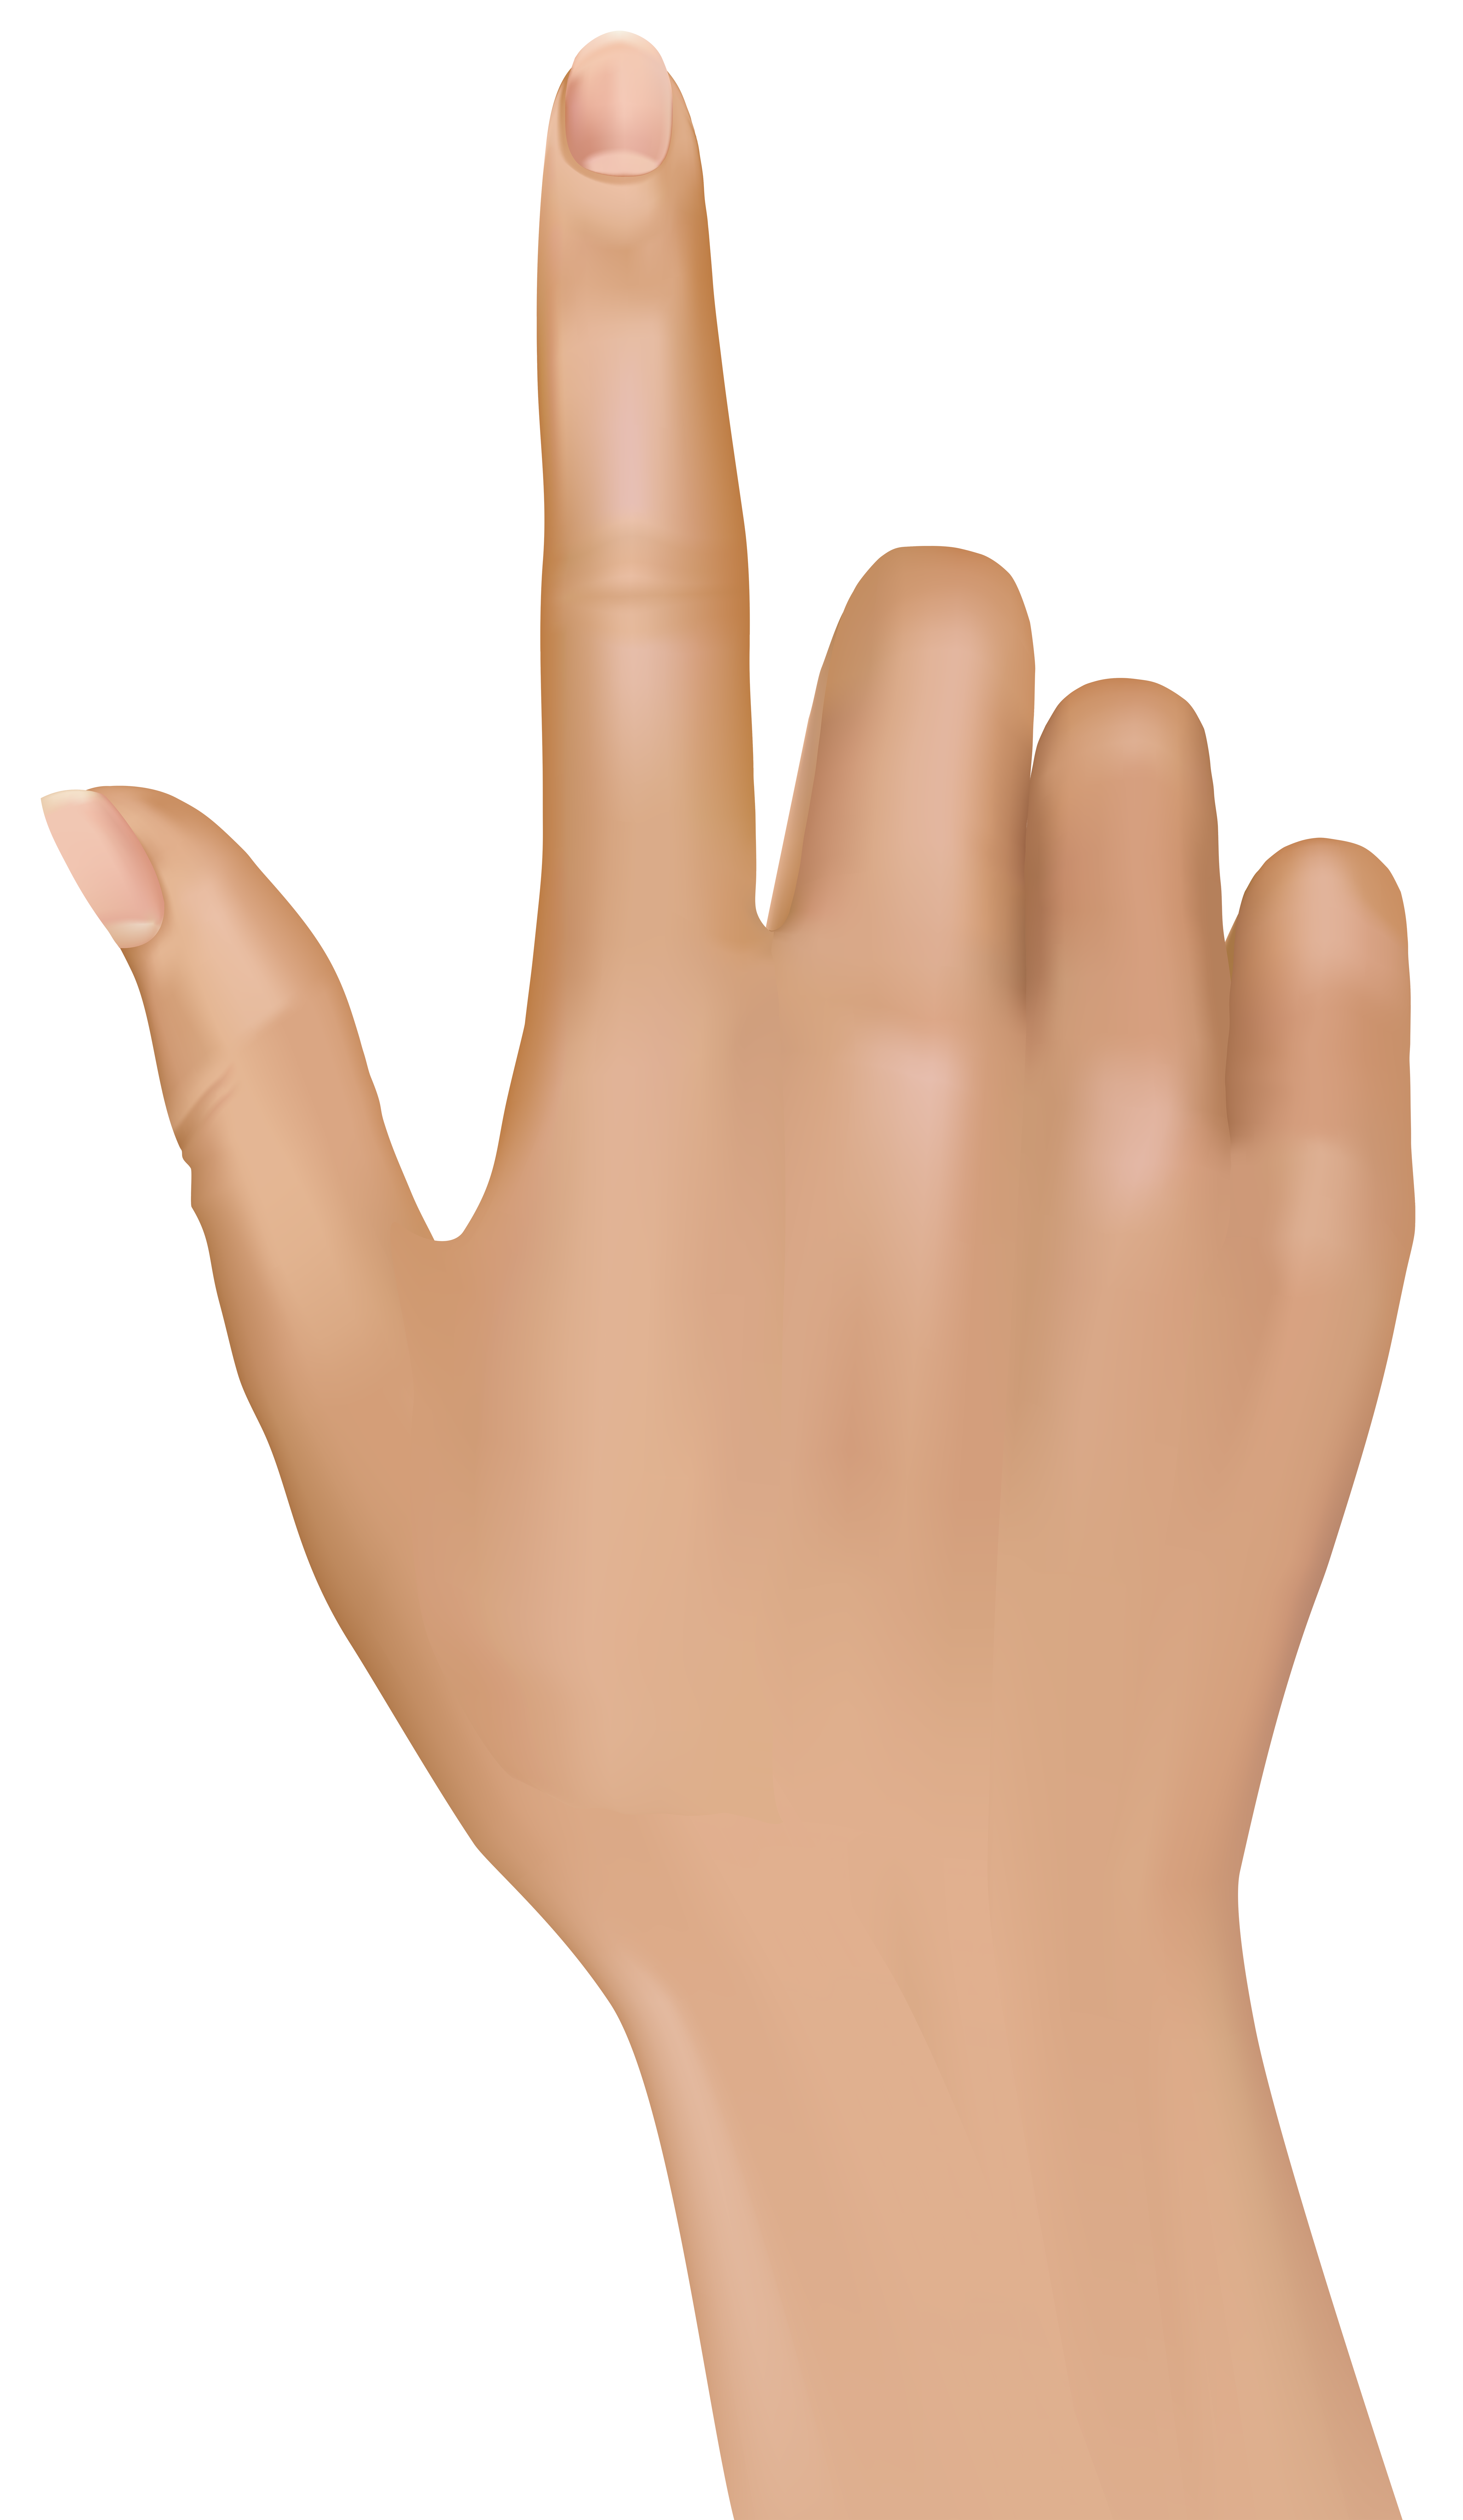 Finger at getdrawings com. Nail clipart womens hand